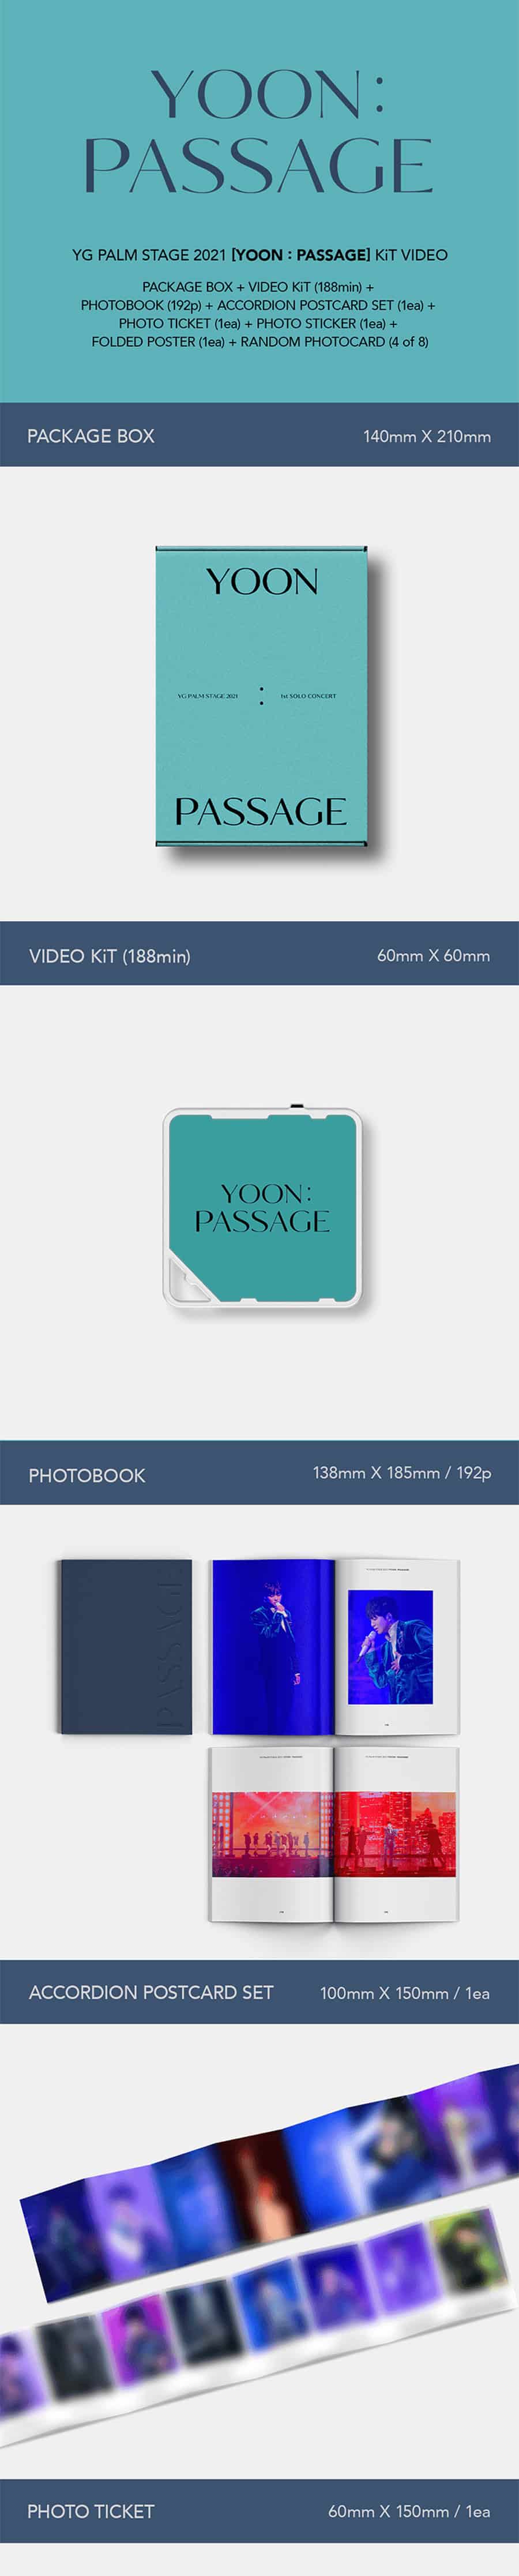 yg-palm-stage-2021-yoon-passage-kit-video-wholesale